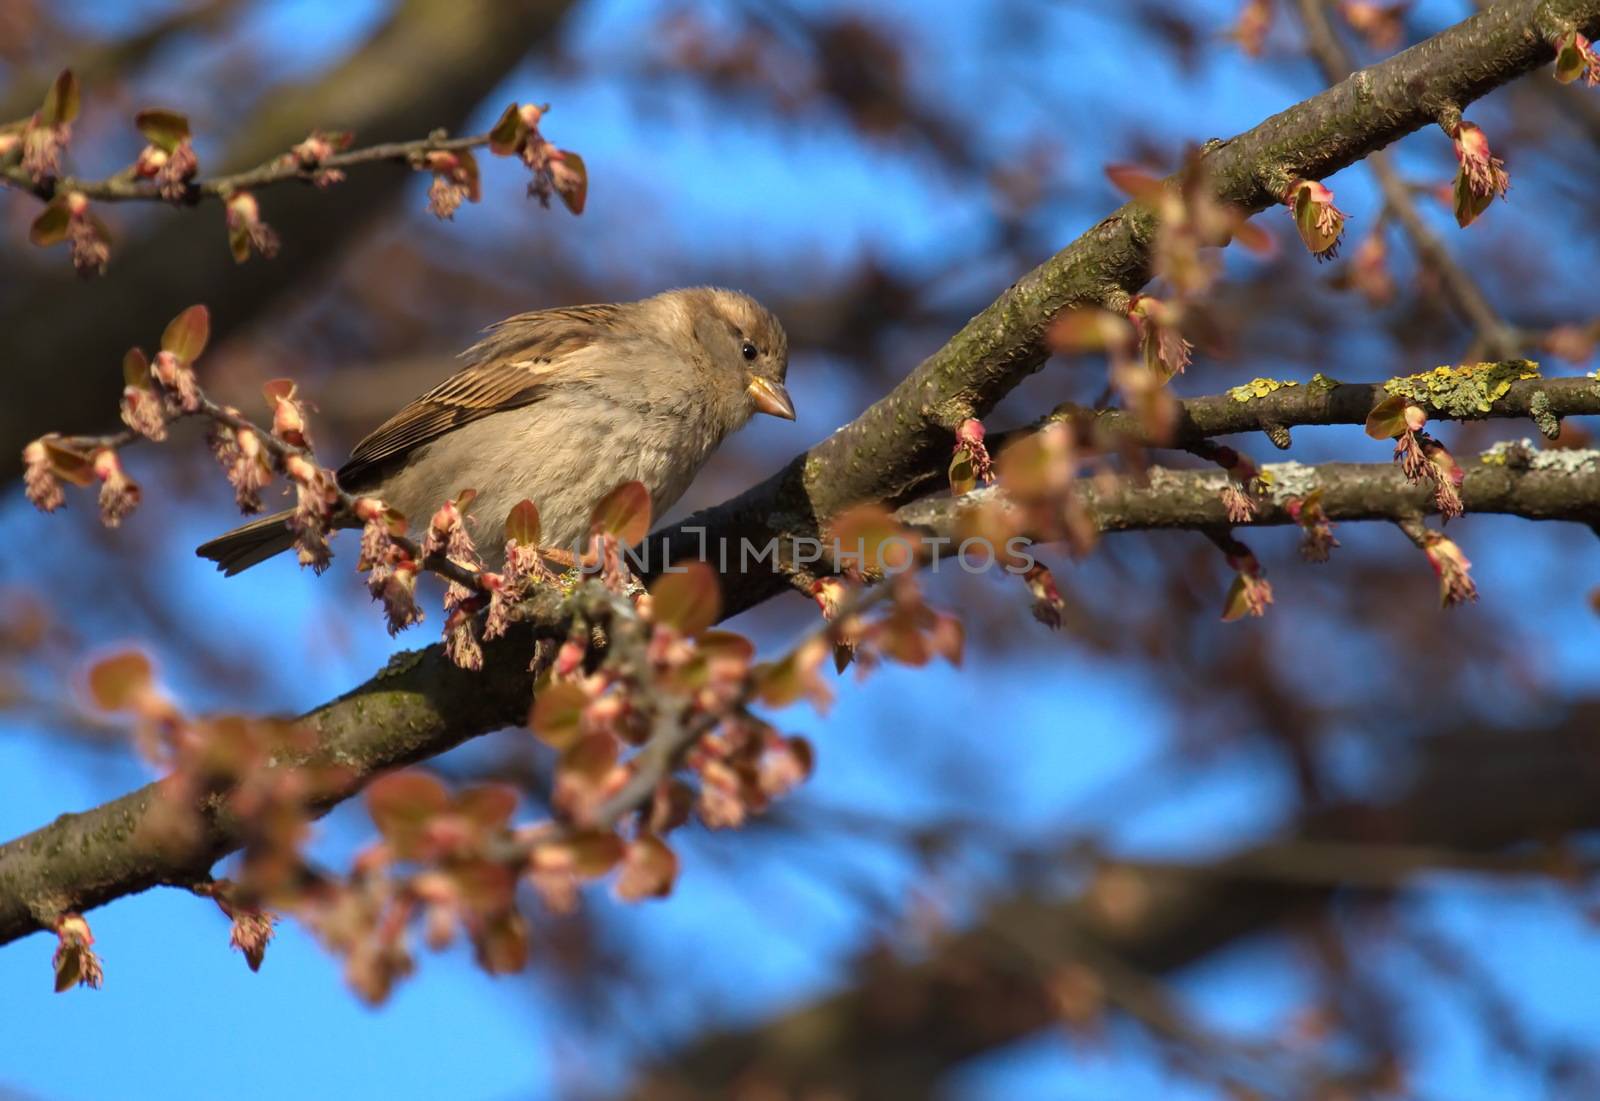 Female sparrow by Elenaphotos21